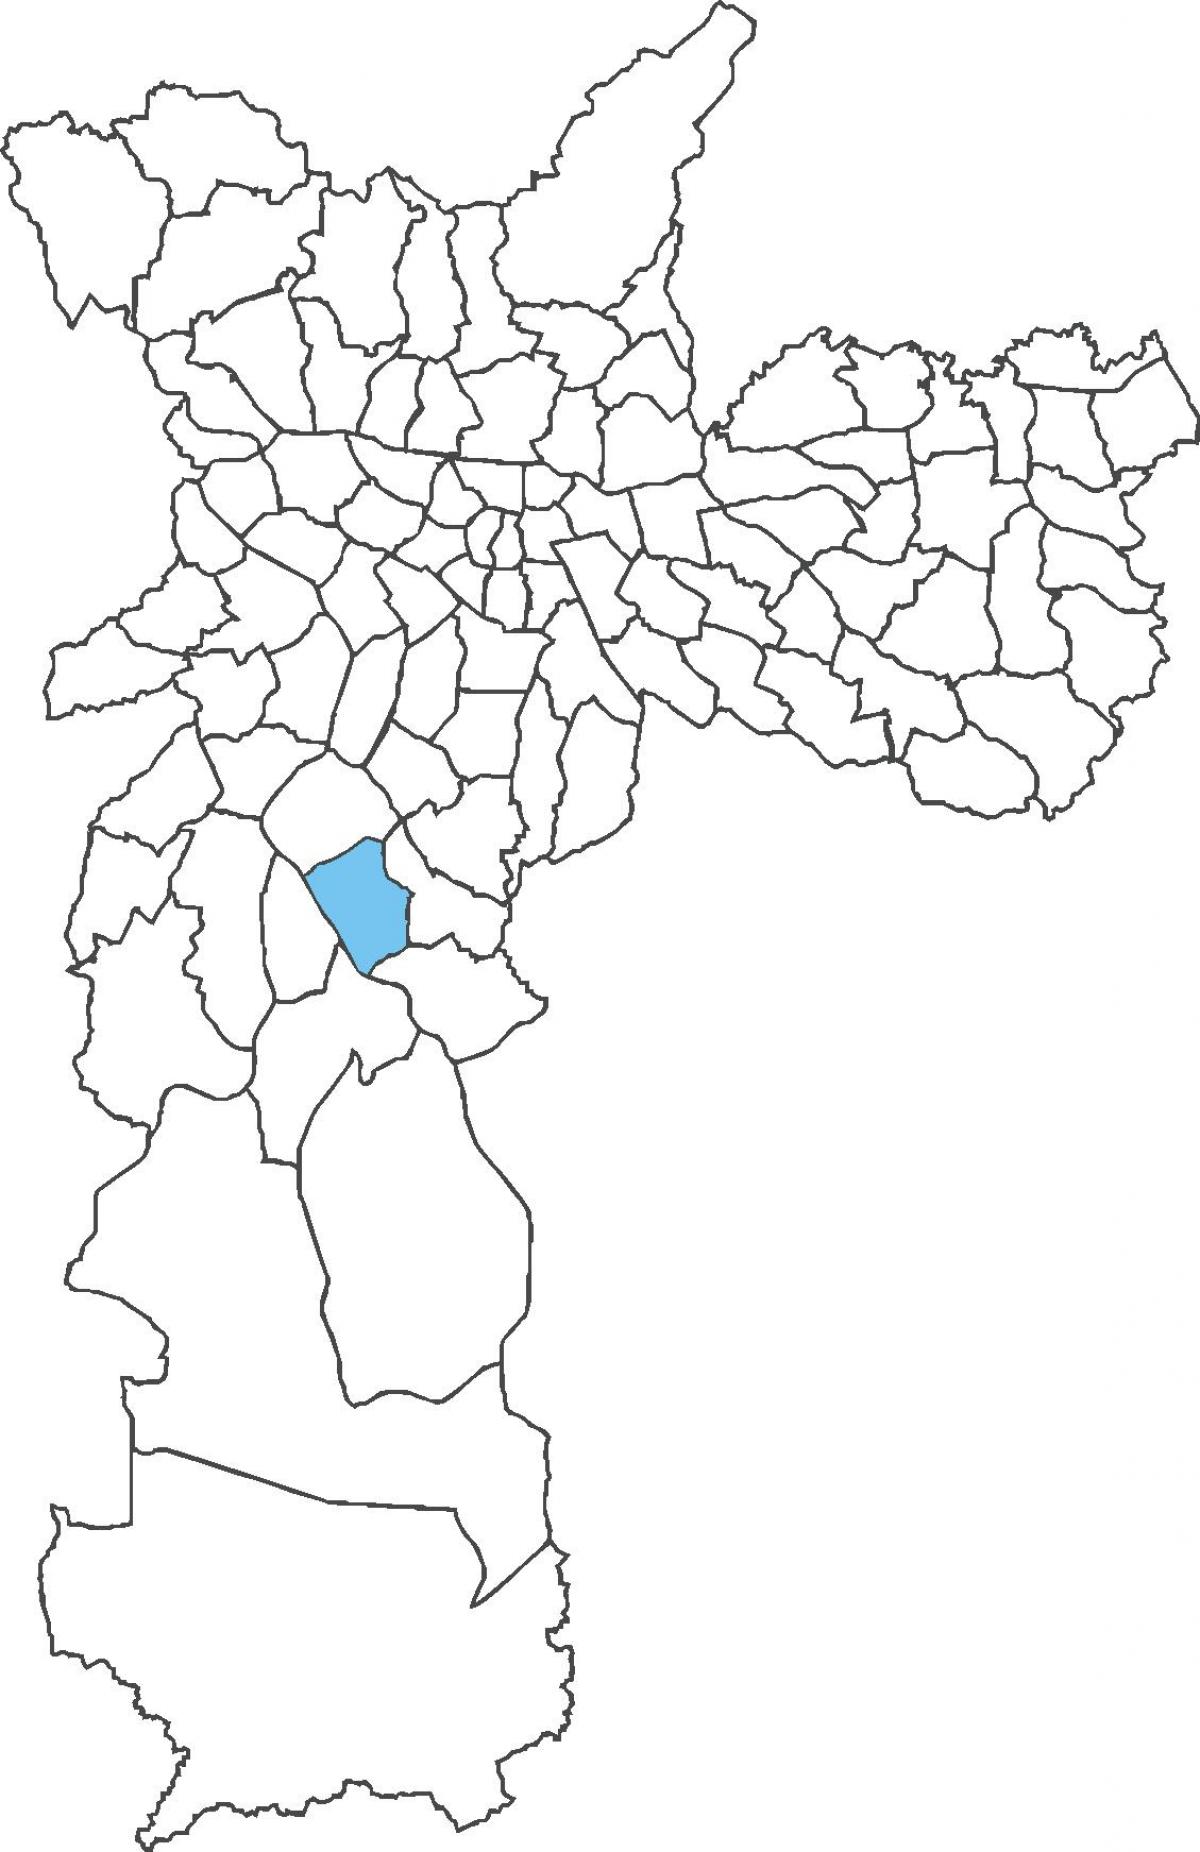 Karte Campo Grande rajons